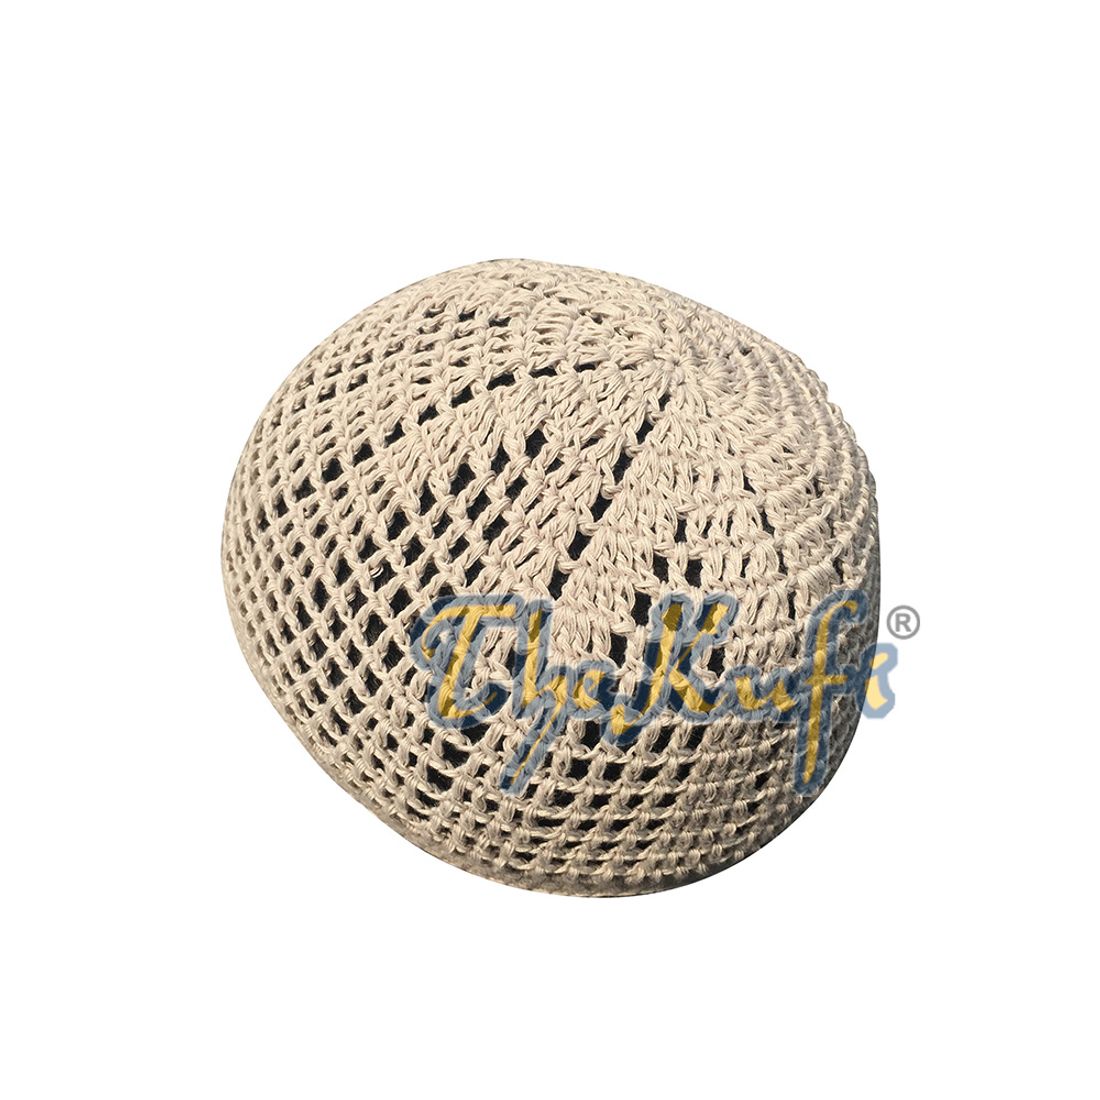 Skull Cap Kufi Cotton Light Brown Tight & Loose Weave Design Crochet Knit Head Cover